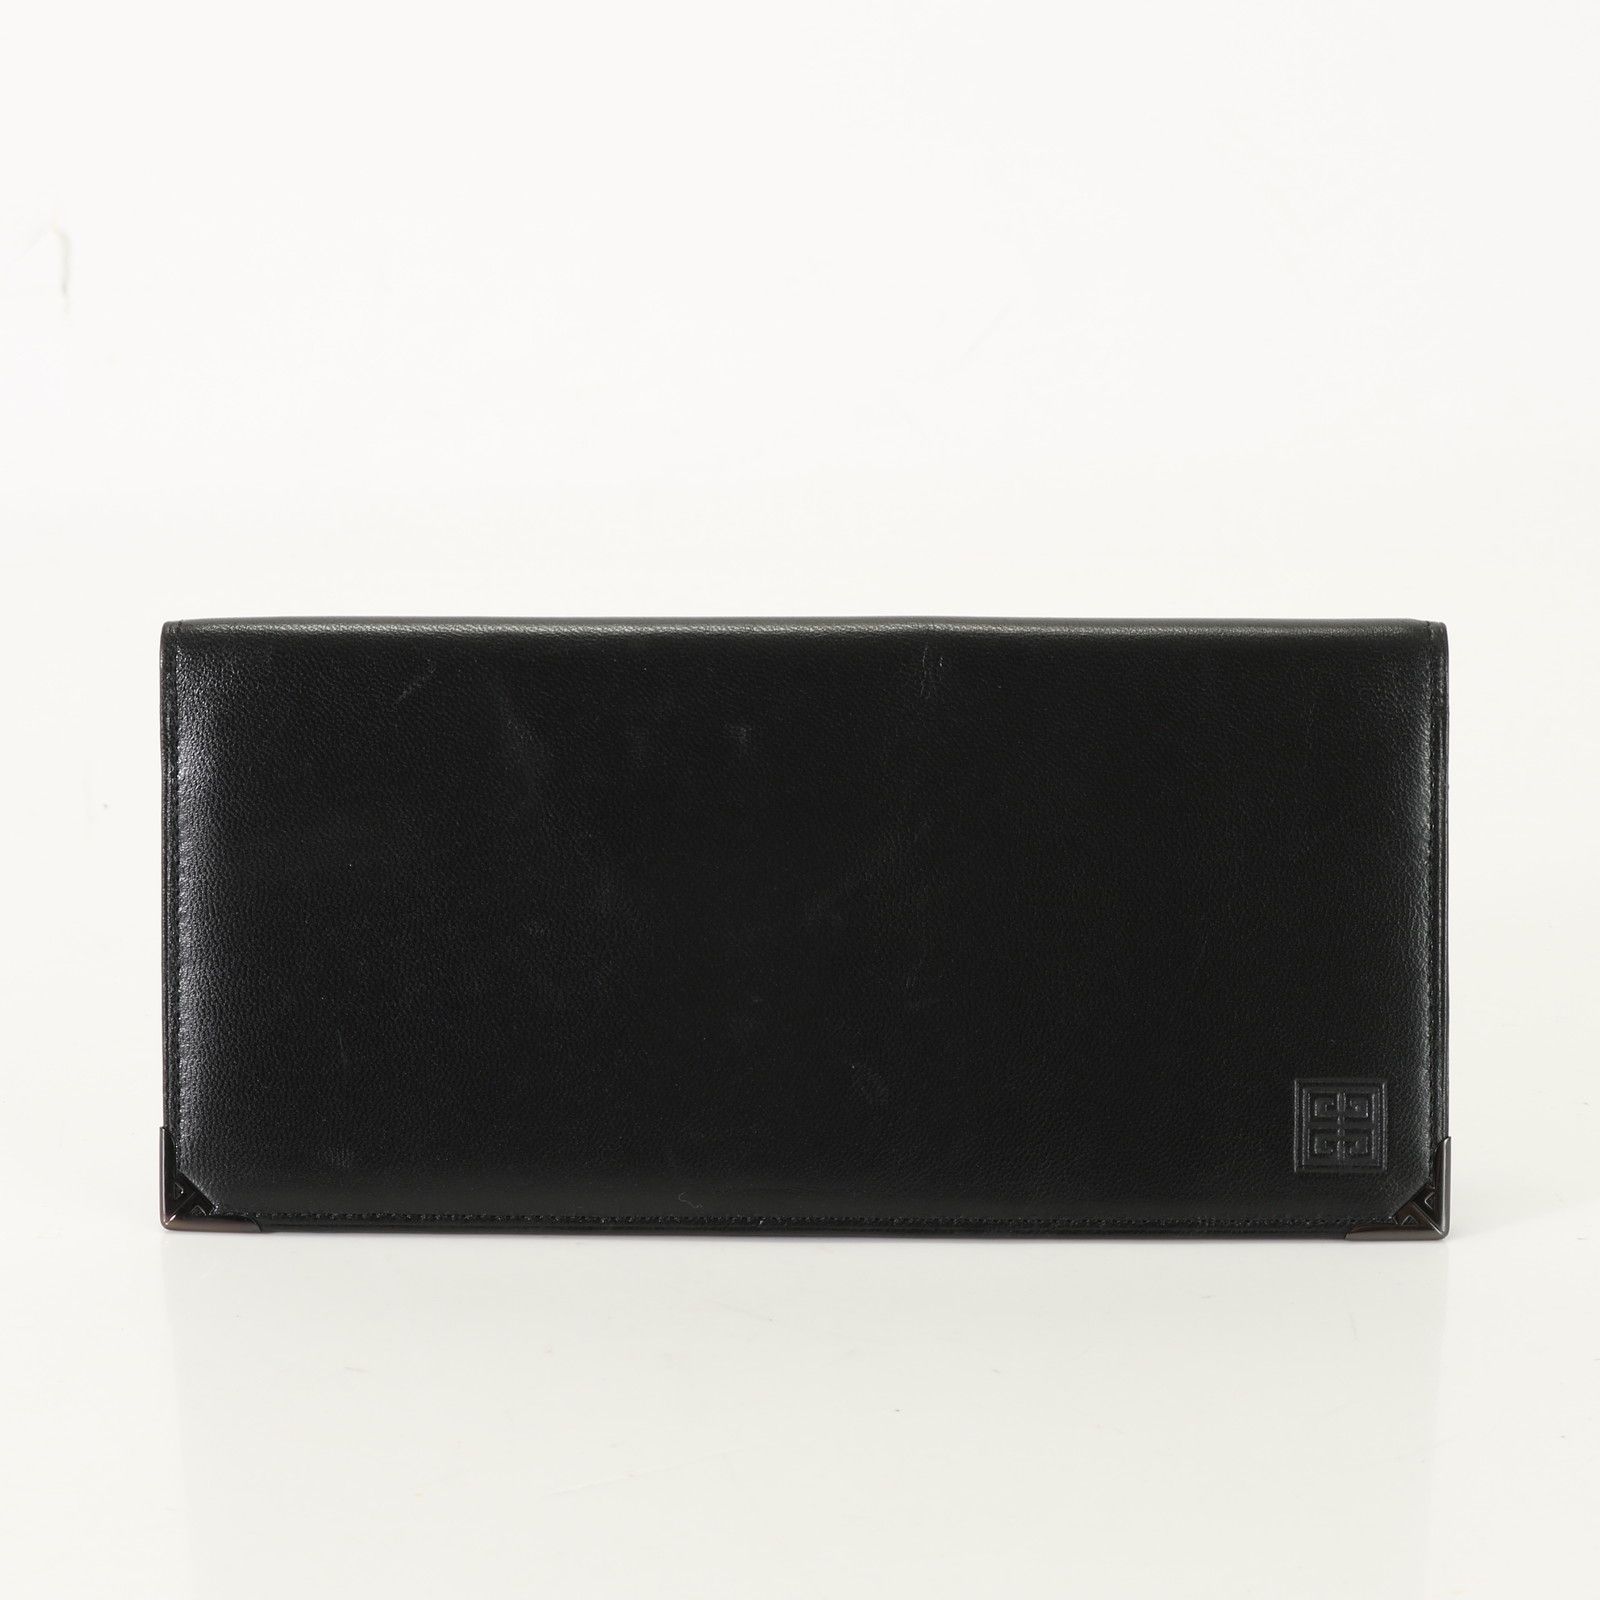 【MICHAEL KORS】二つ折り財布 ウォレット ロゴ付き 大人気 美品